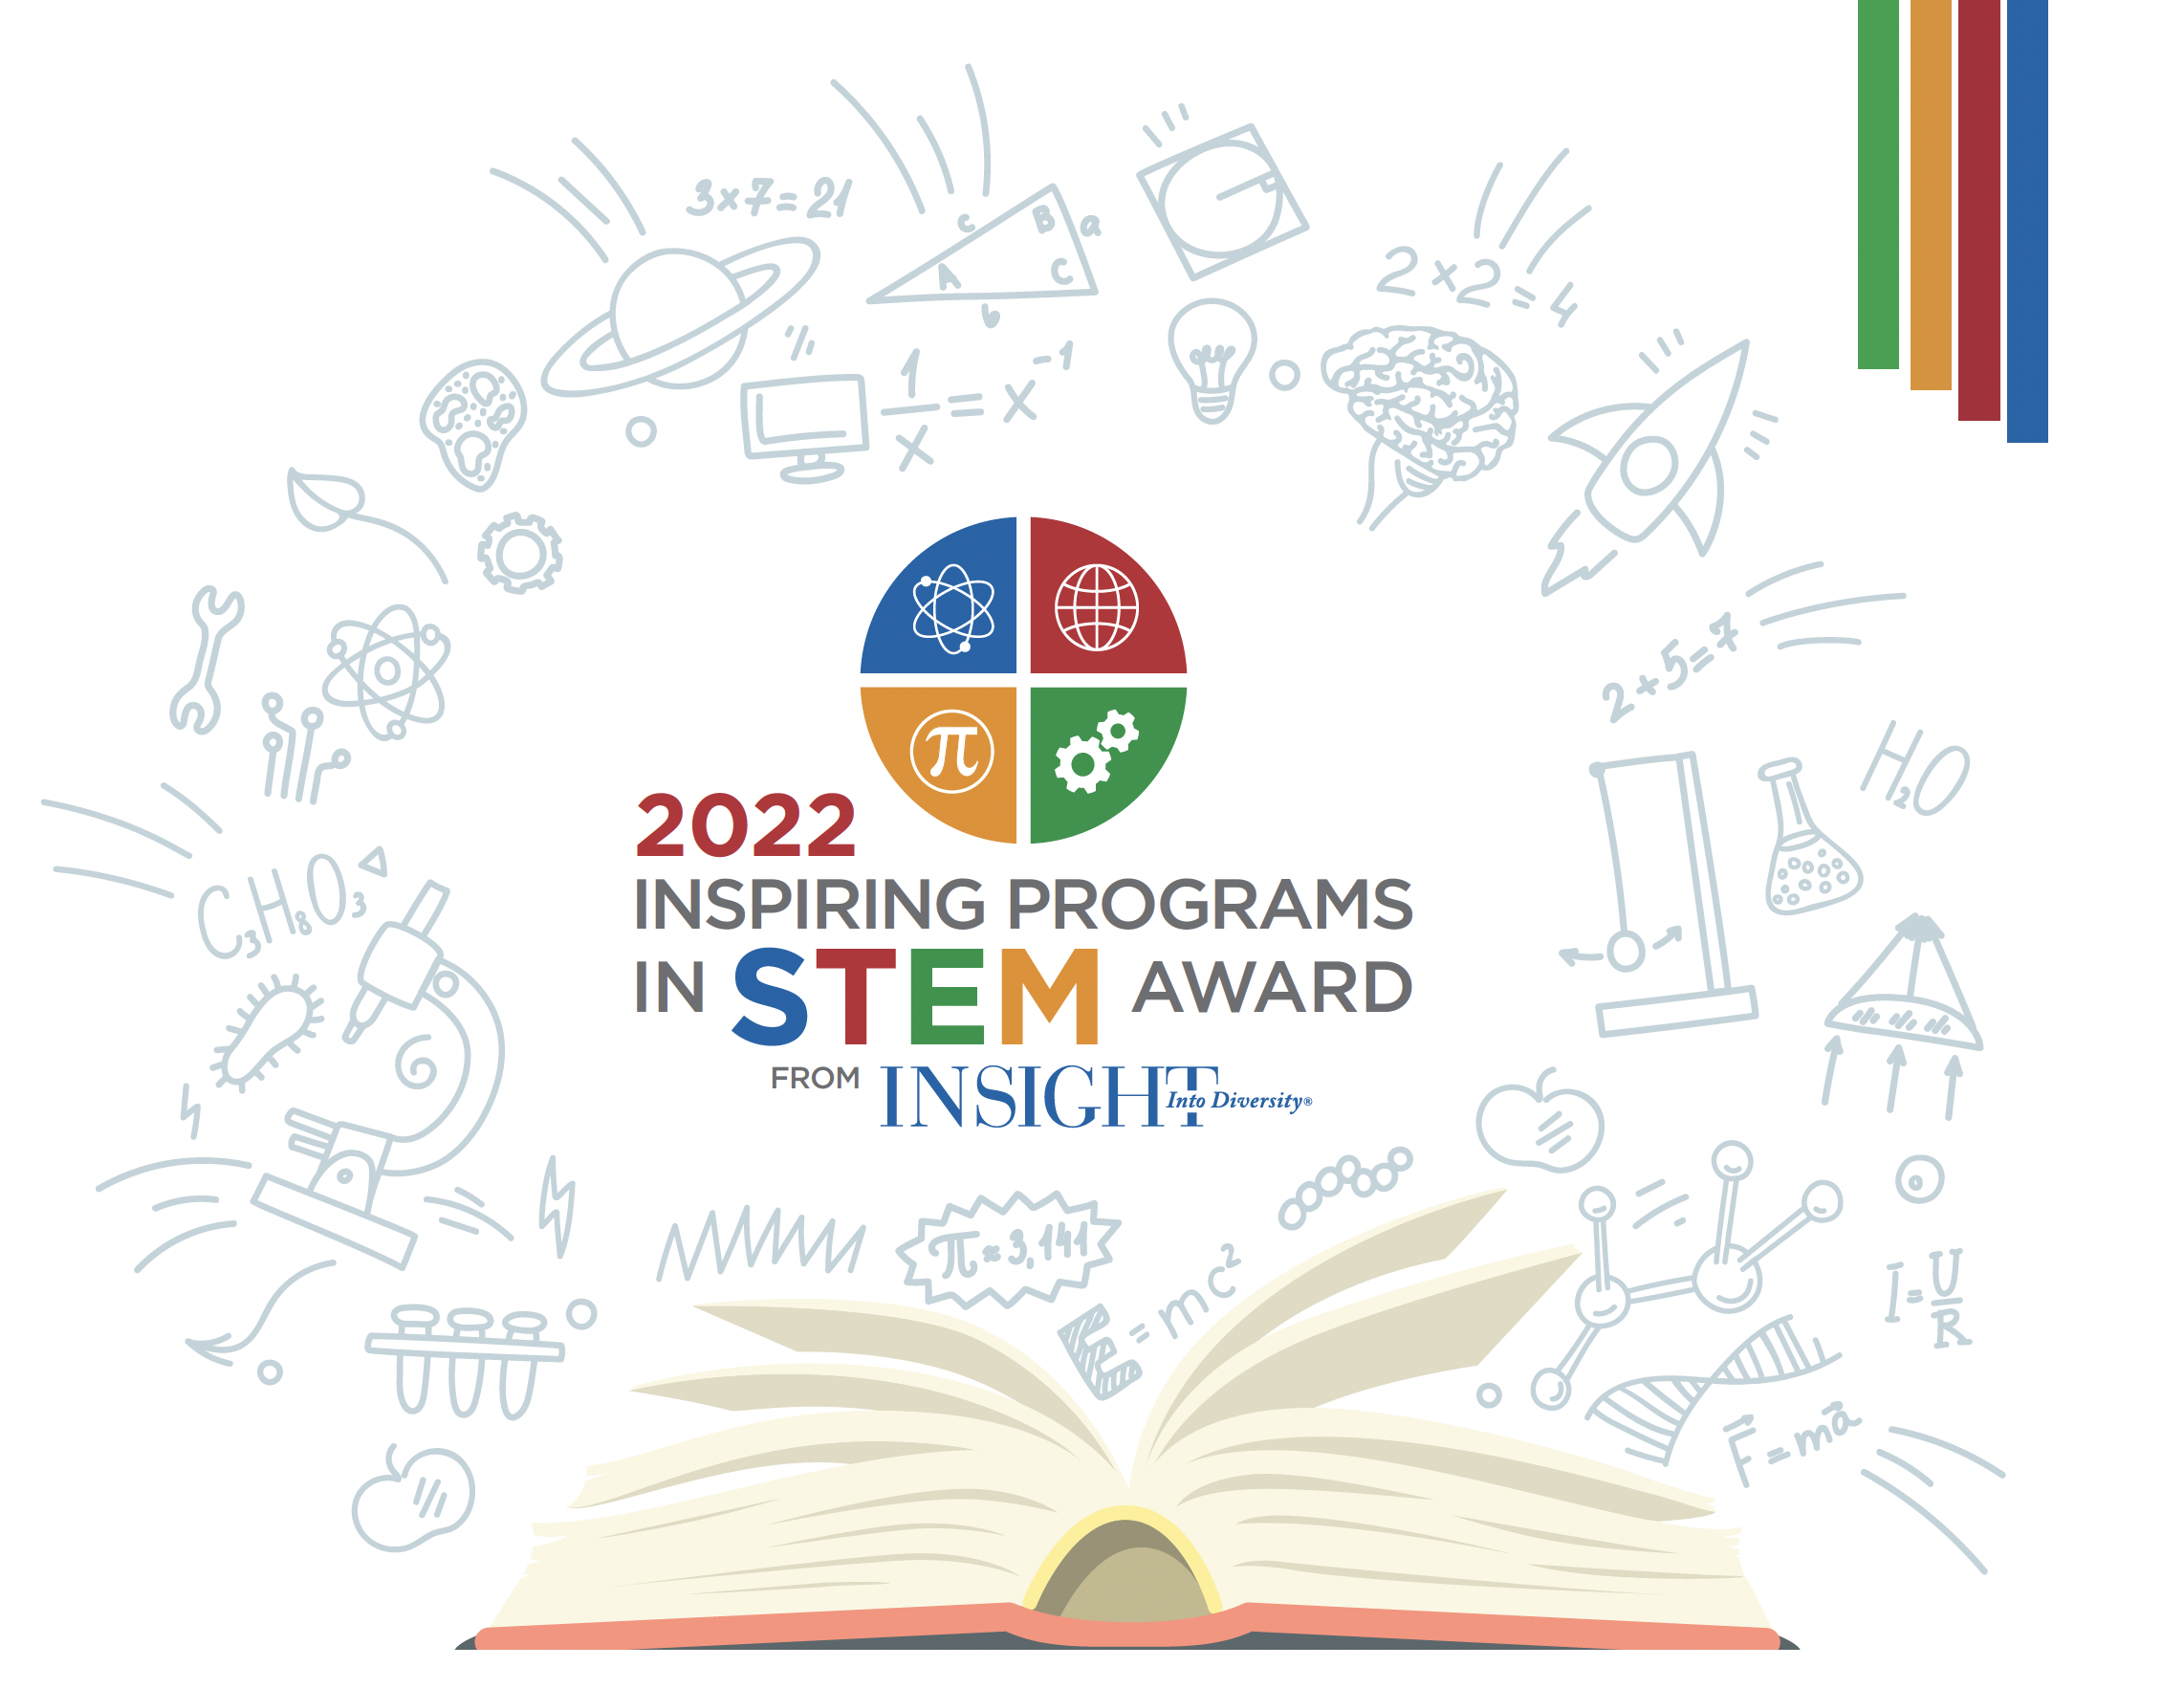 2022 Inspiring Programs in STEM Award, Insight Into Diversity